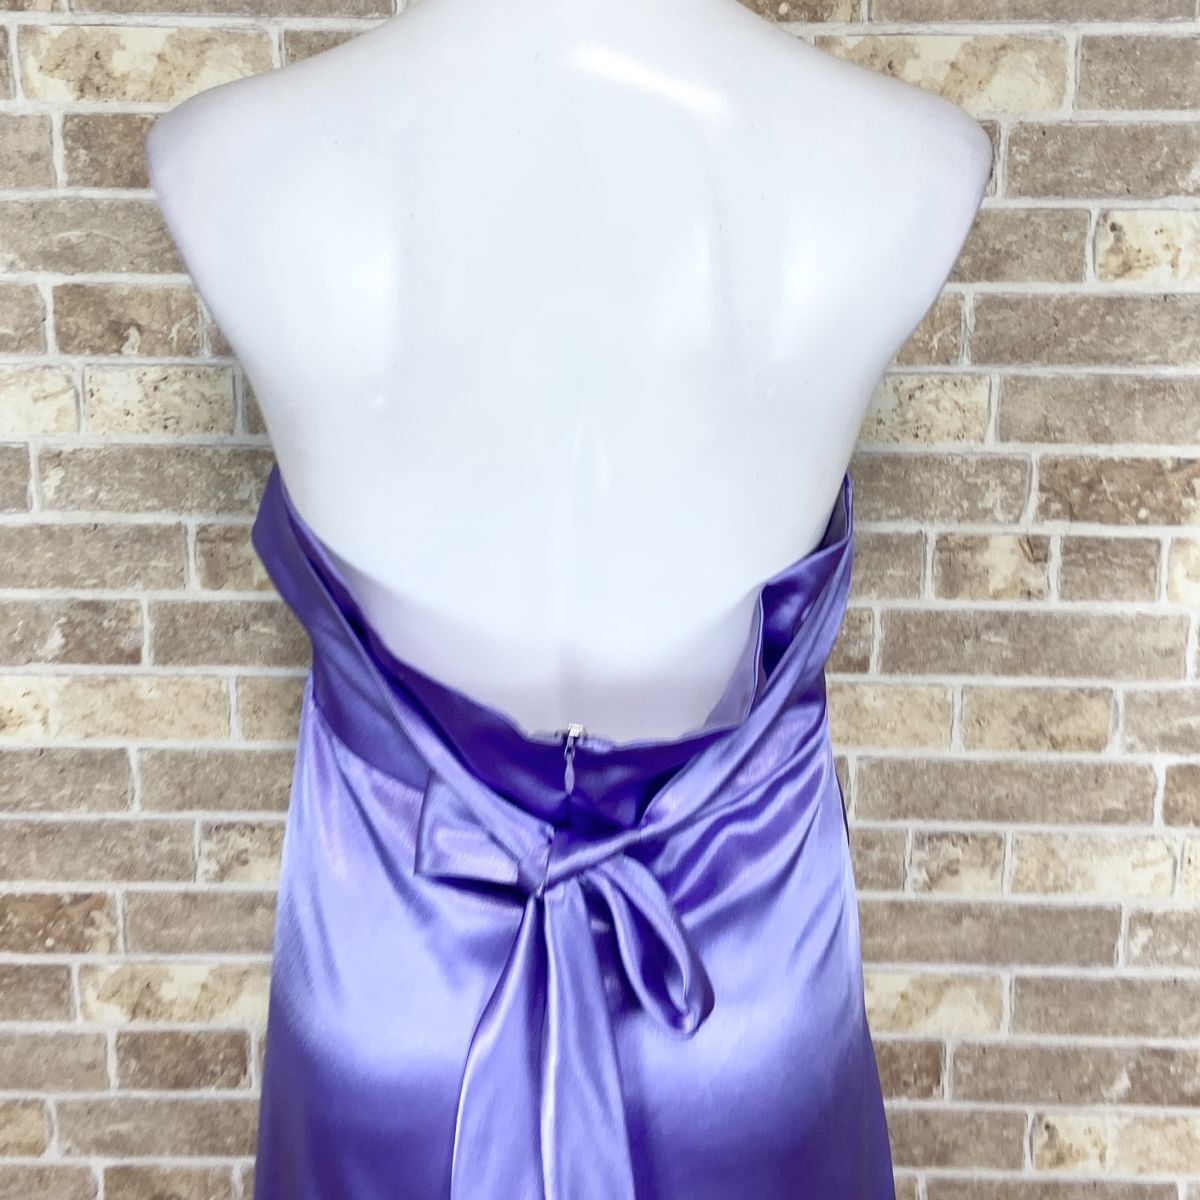 1 jpy dress long dress purple lustre largish size color dress kyabadore presentation Event used 4540